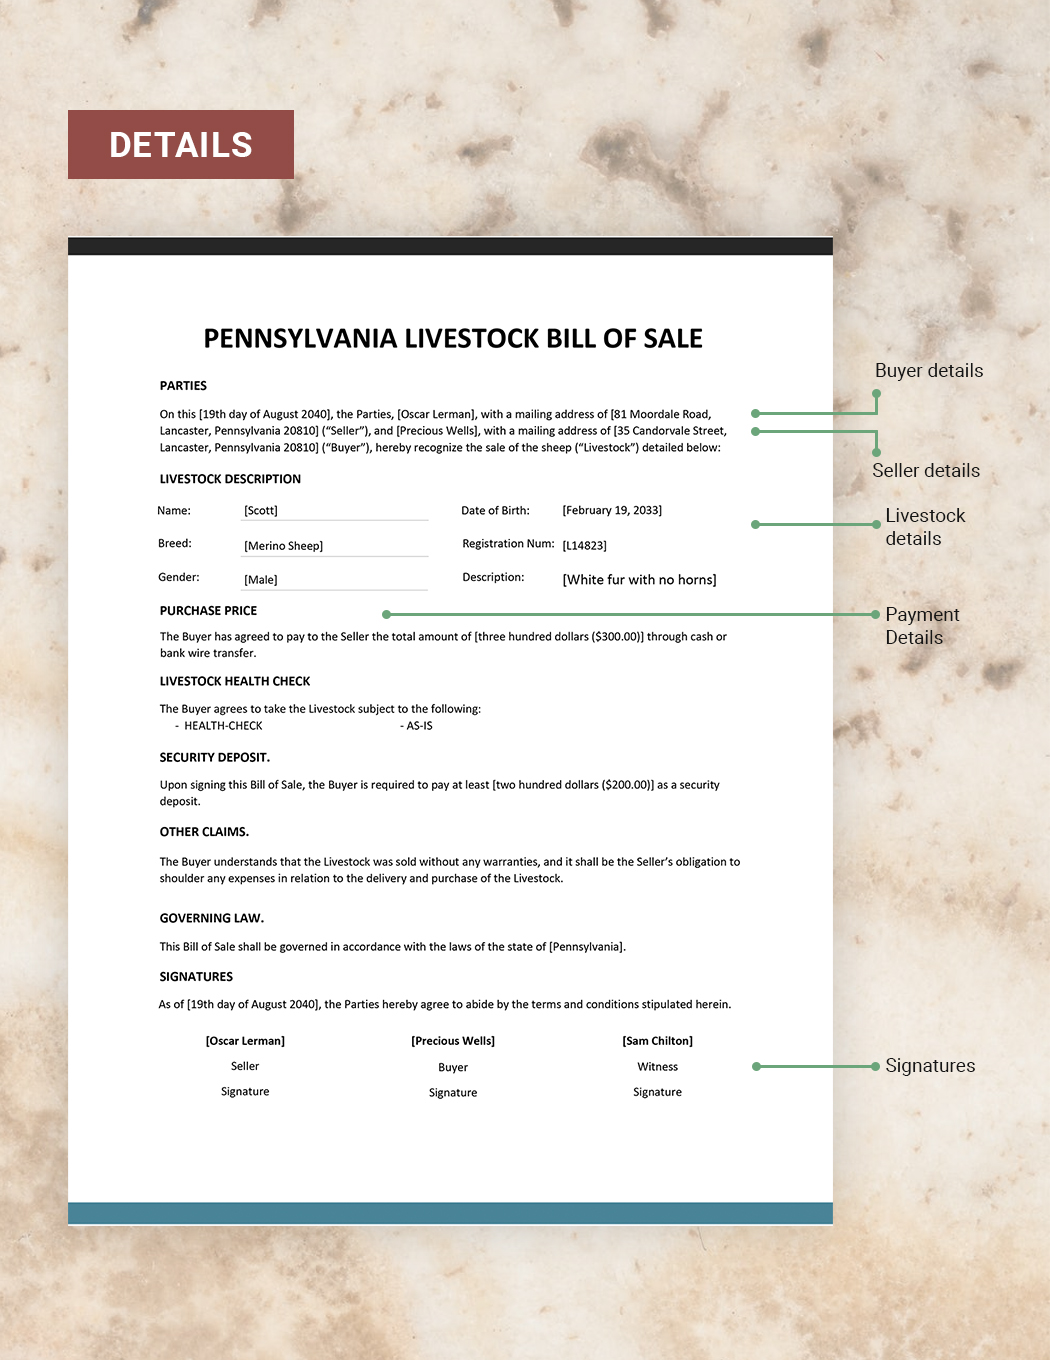 Pennsylvania Livestock Bill of Sale Template